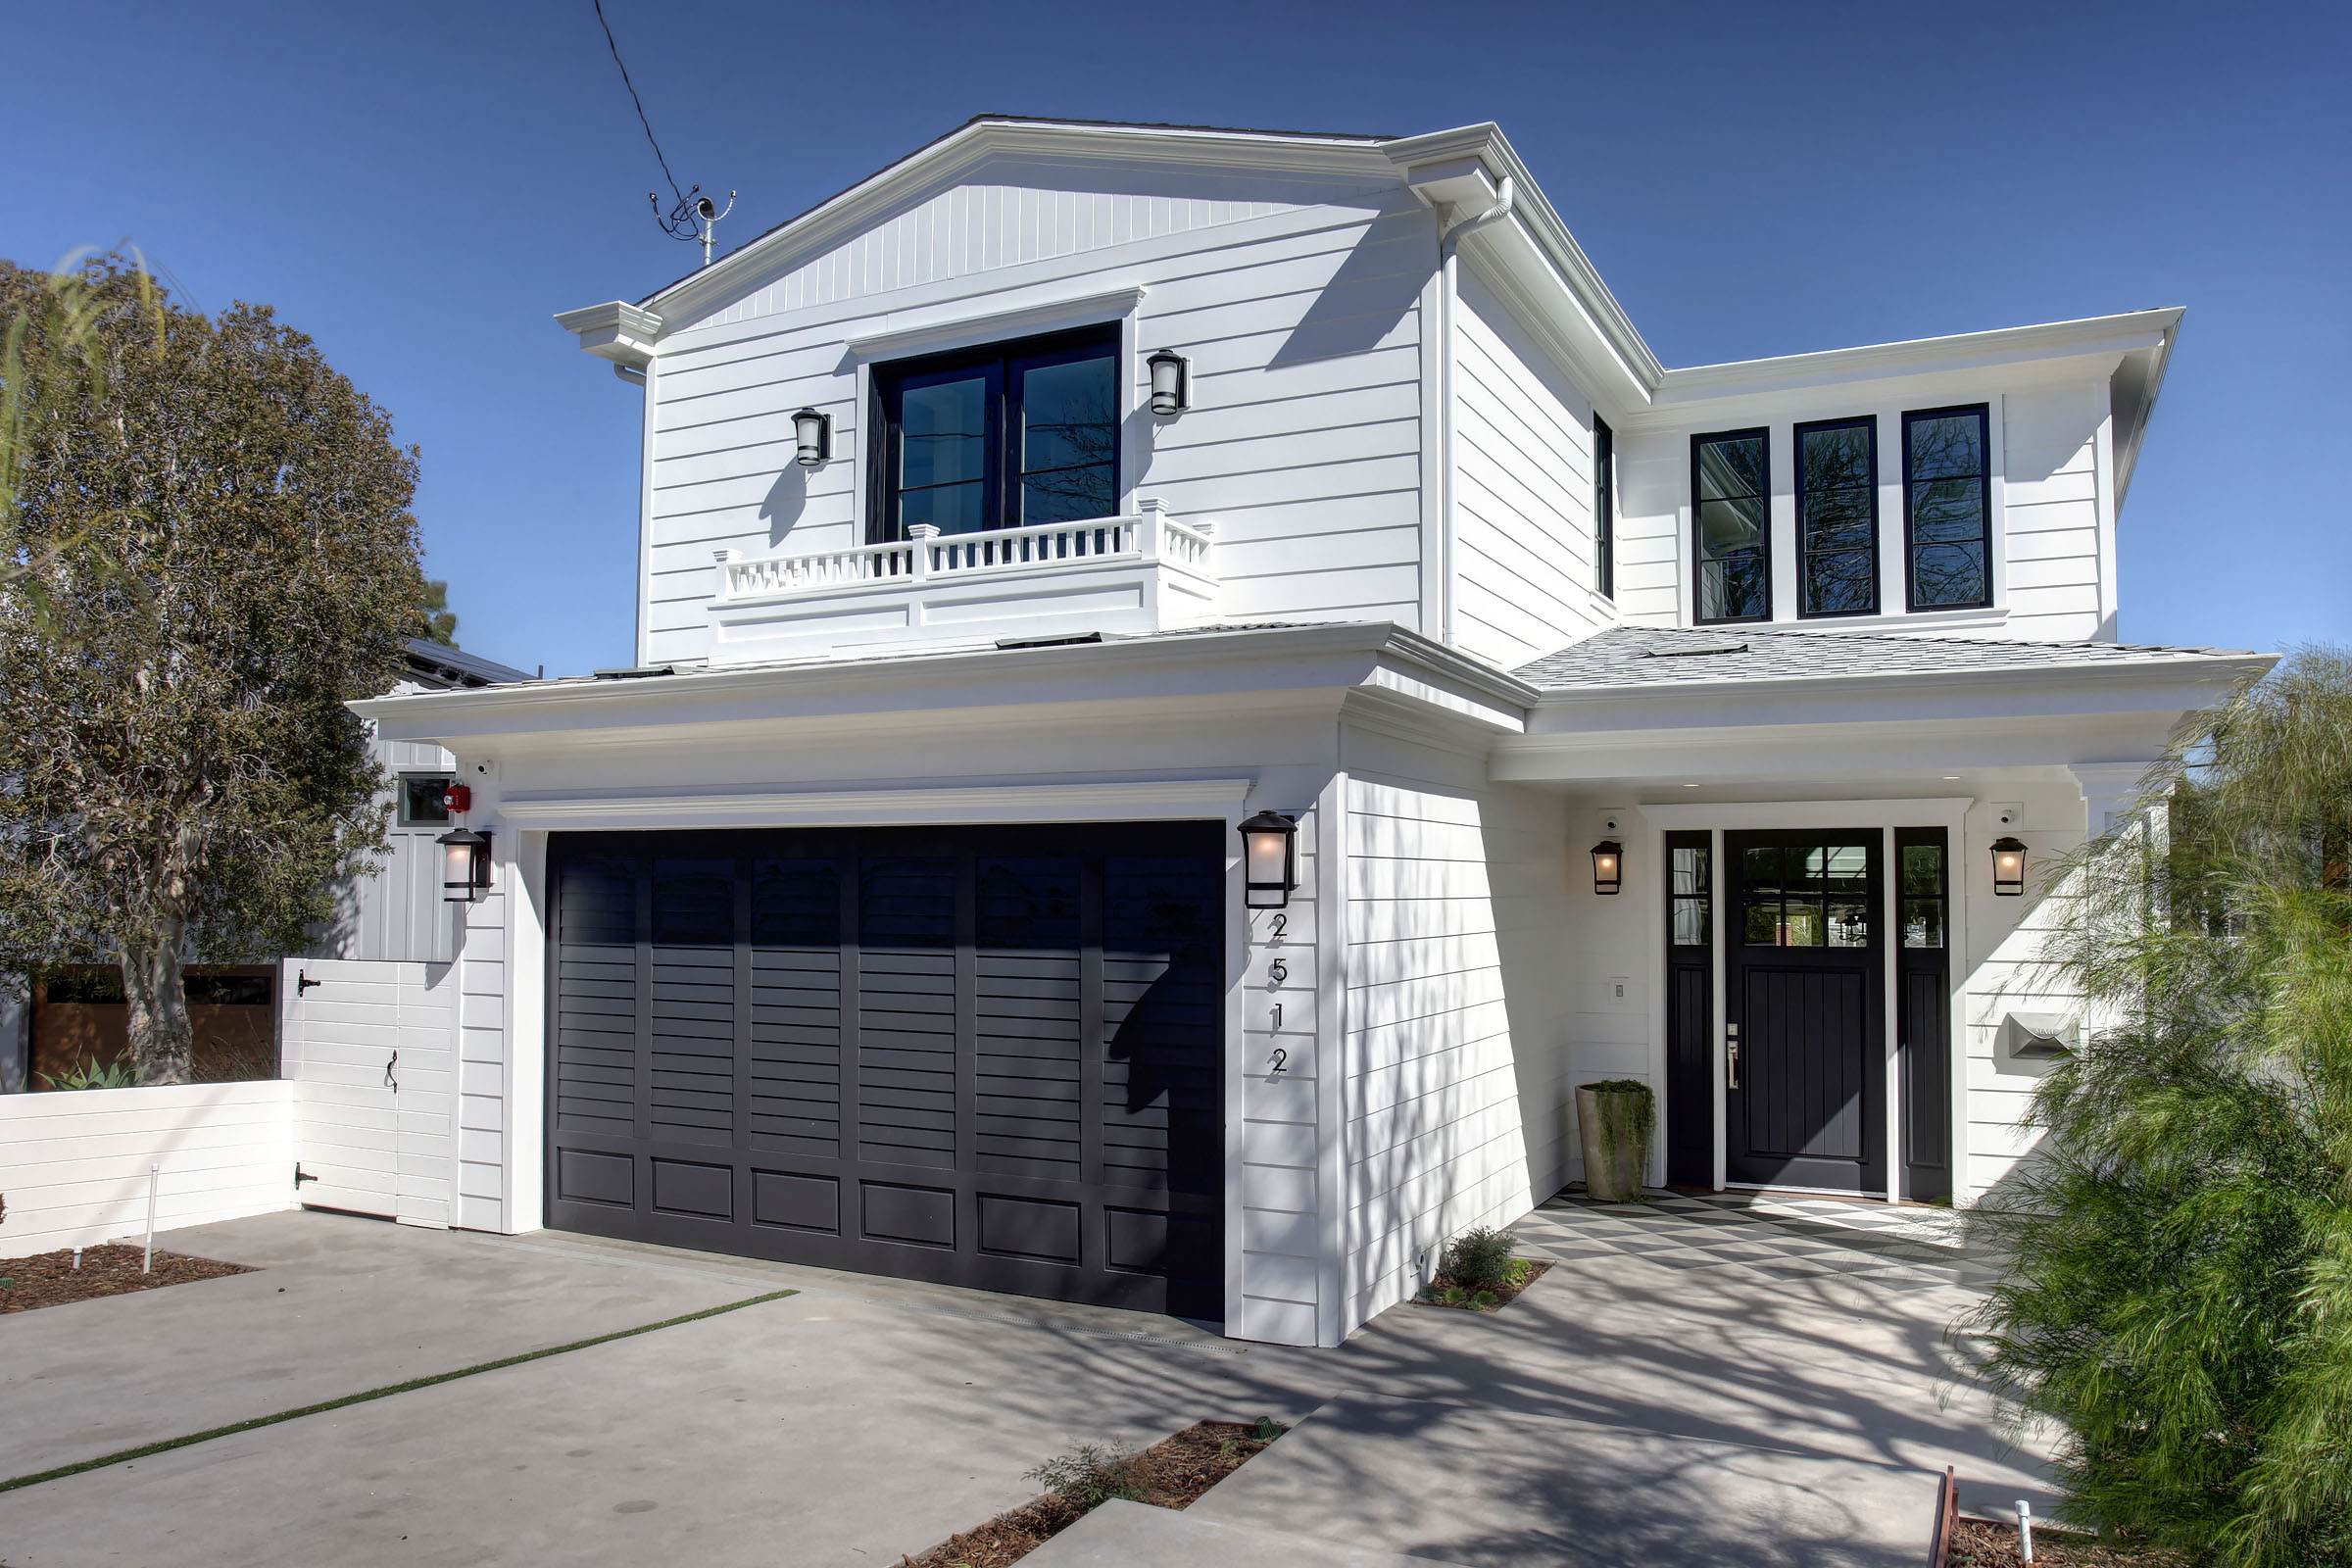 Exterior - Meticulously Detailed Cape Cod Home in Manhattan Beach, CA